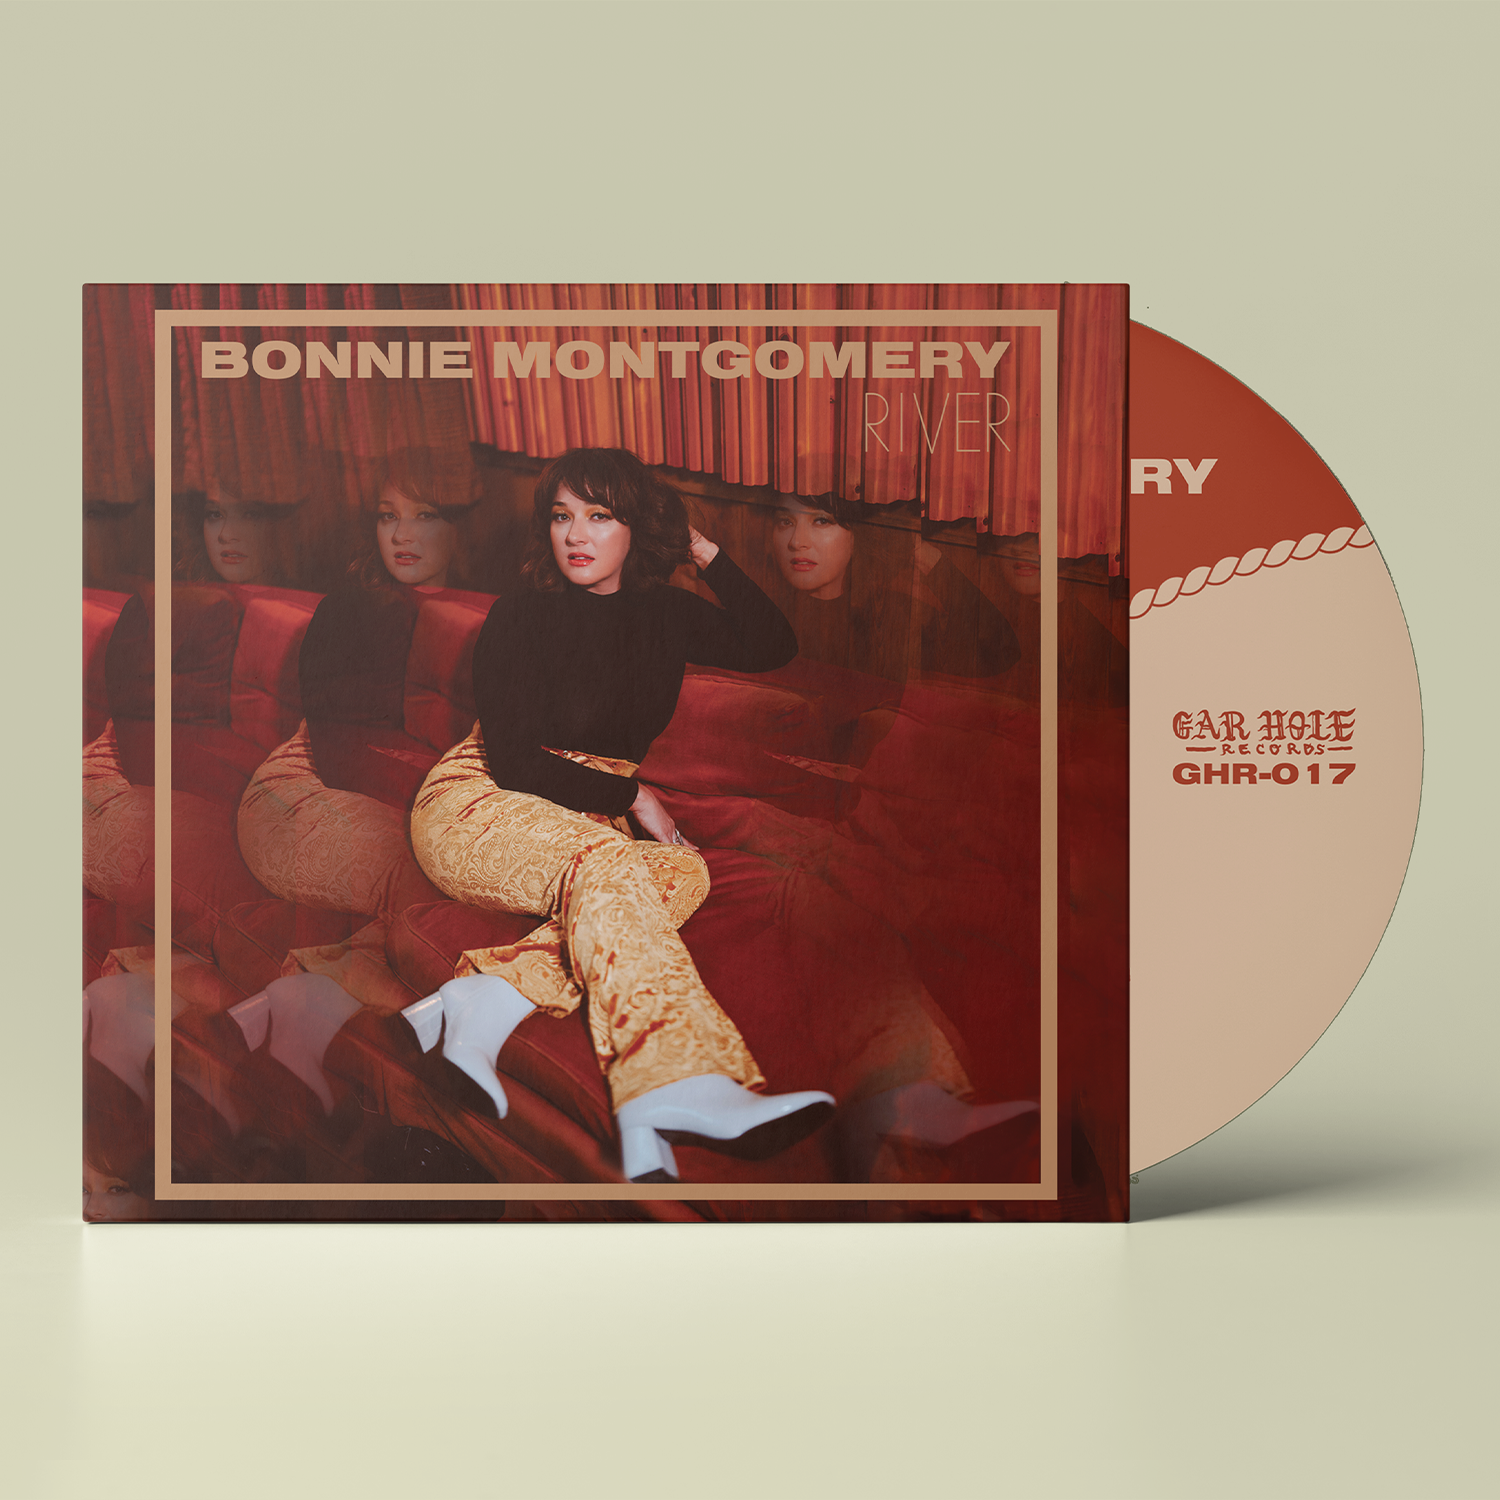 Bonnie Montgomery - "River" CD